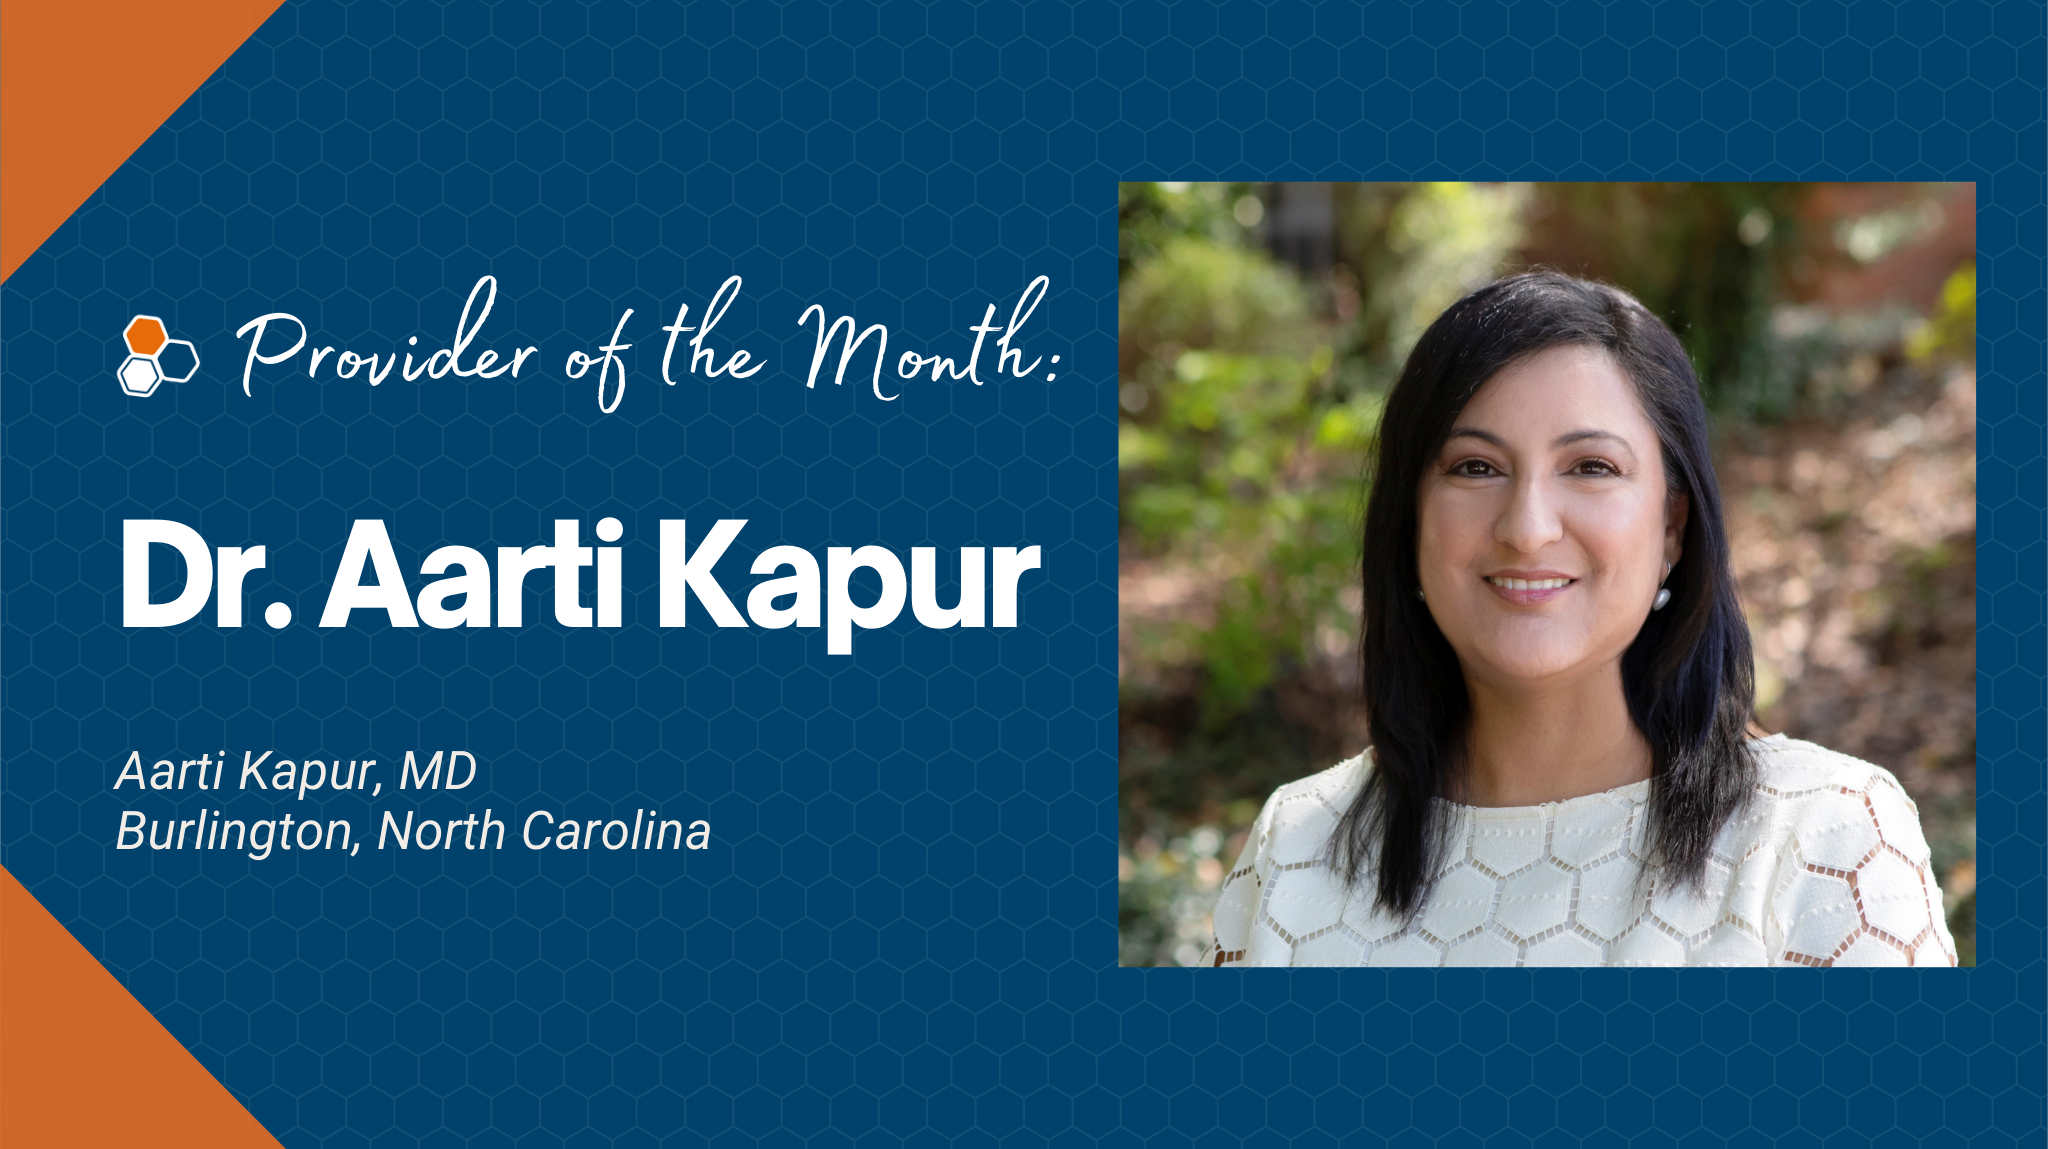 Dr. Aarti Kapur in Burlington, North Carolina, Provider of the Month